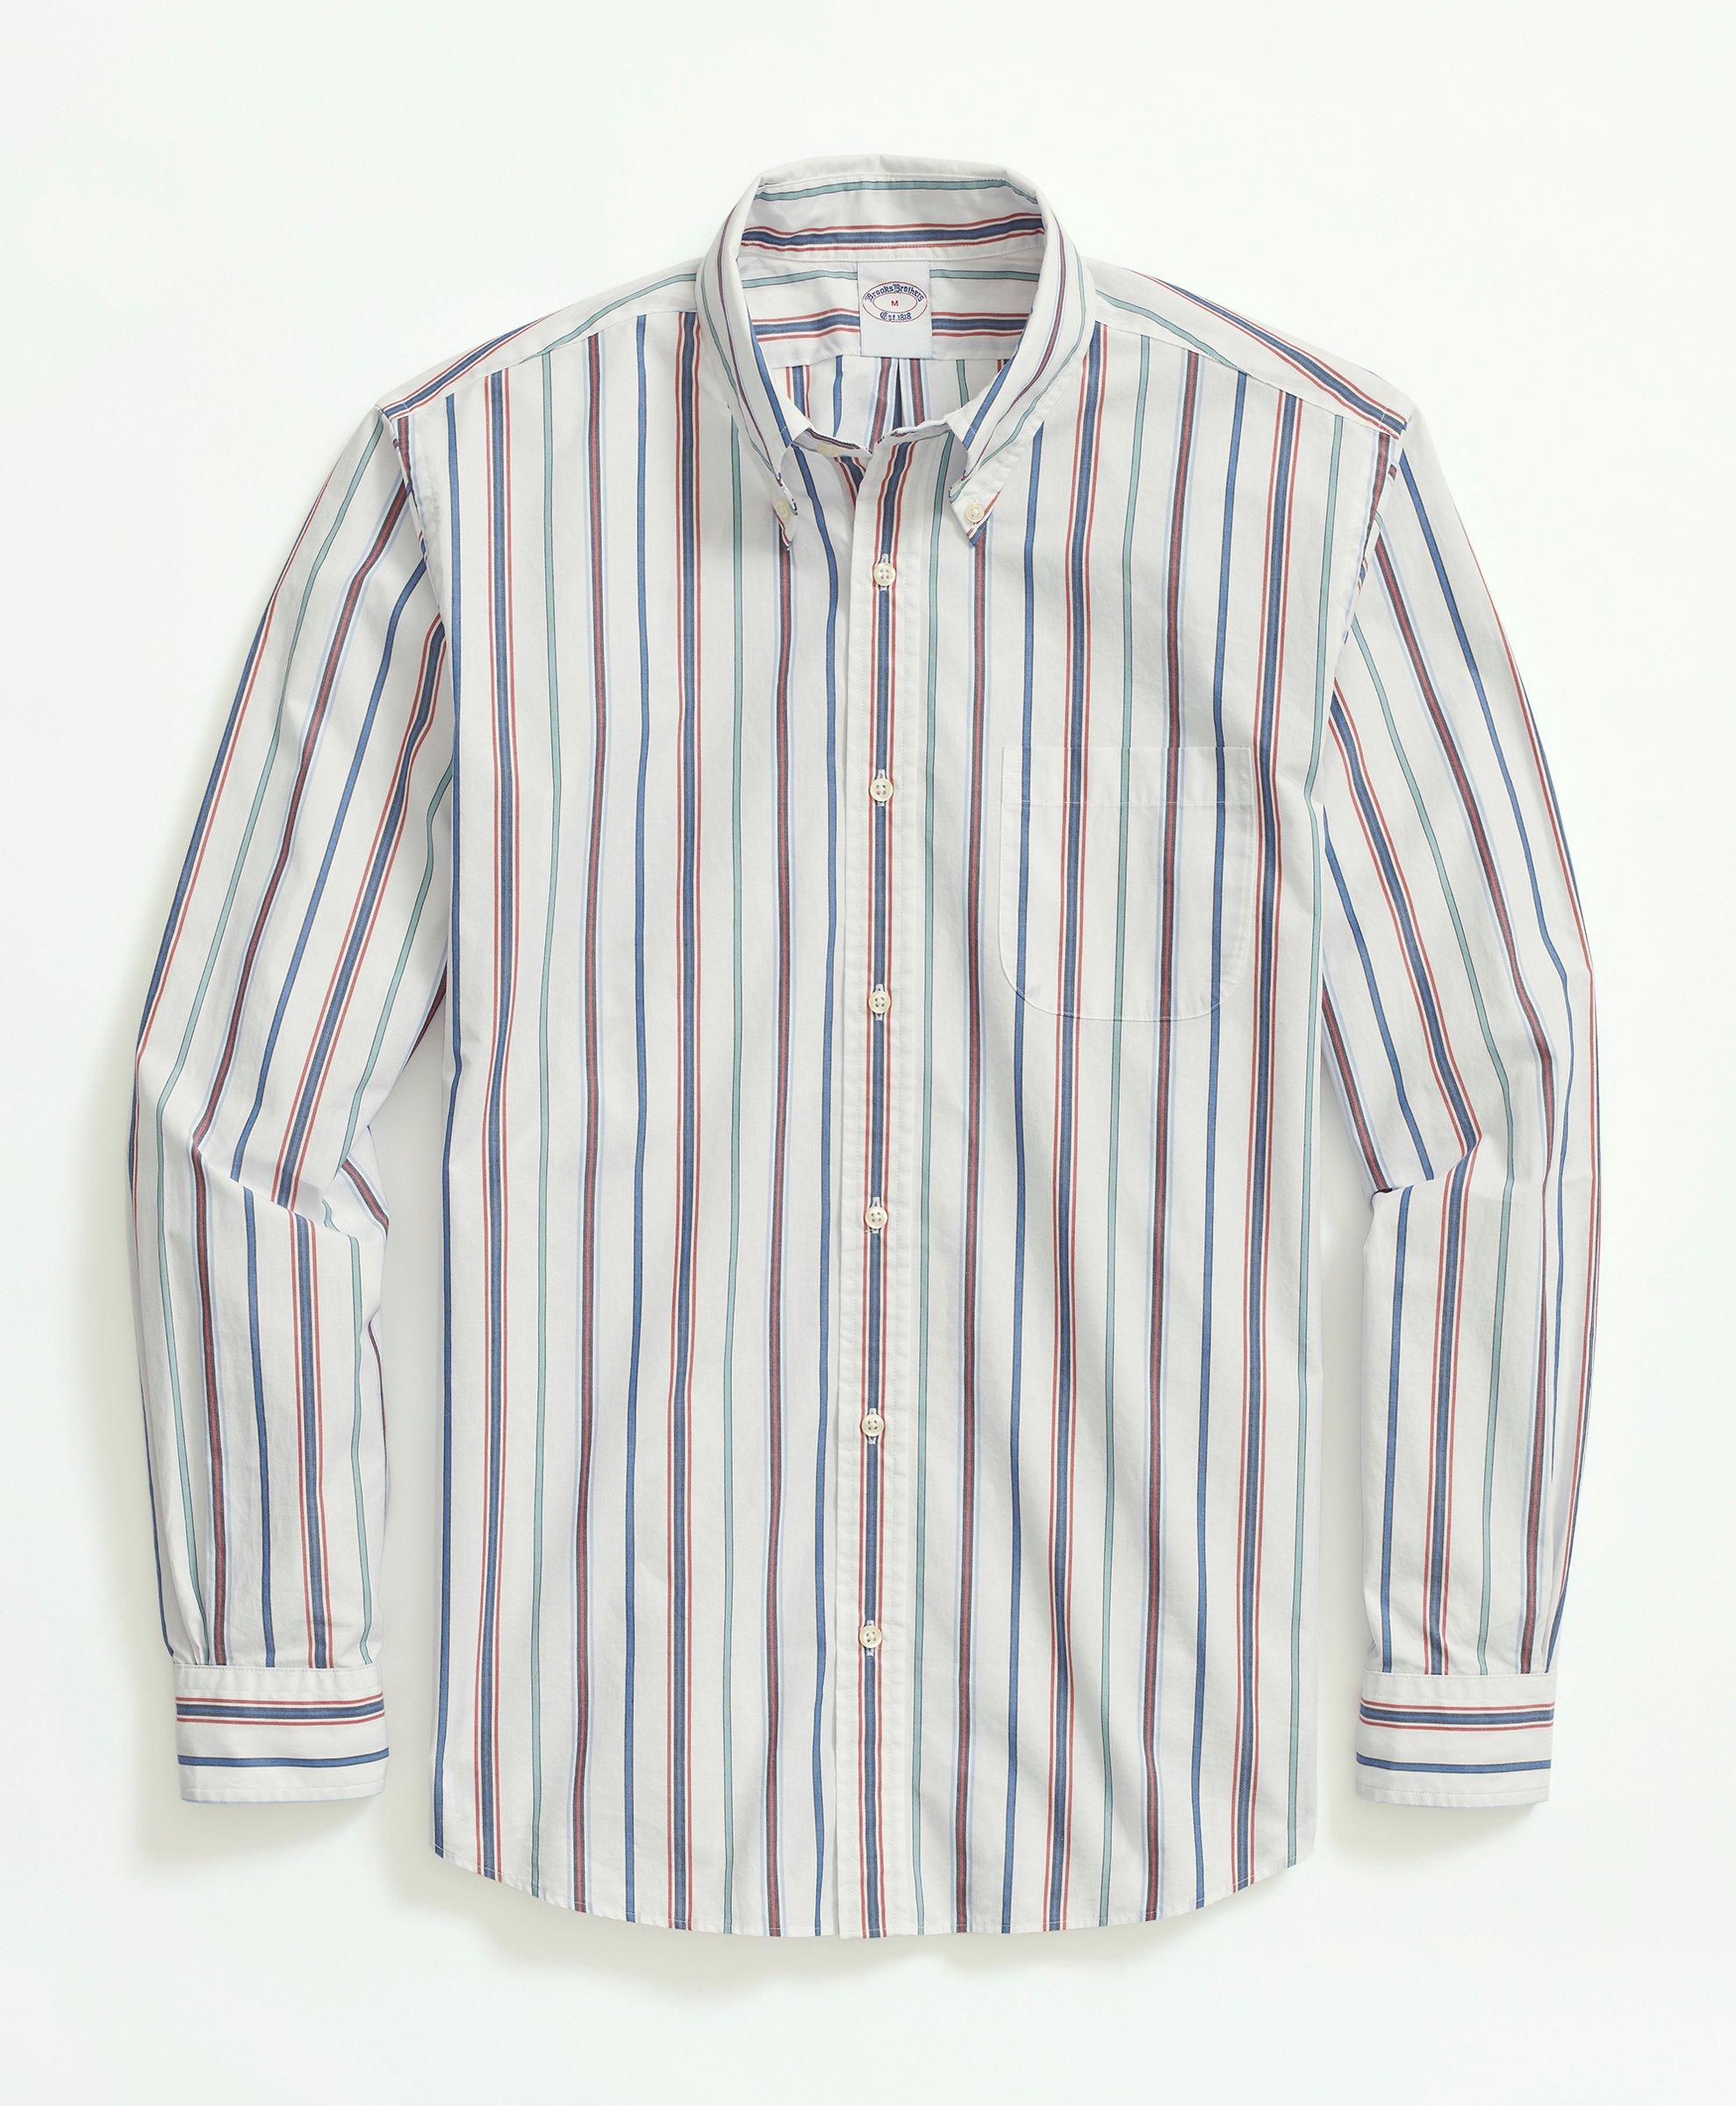 Friday Shirt, Poplin Striped